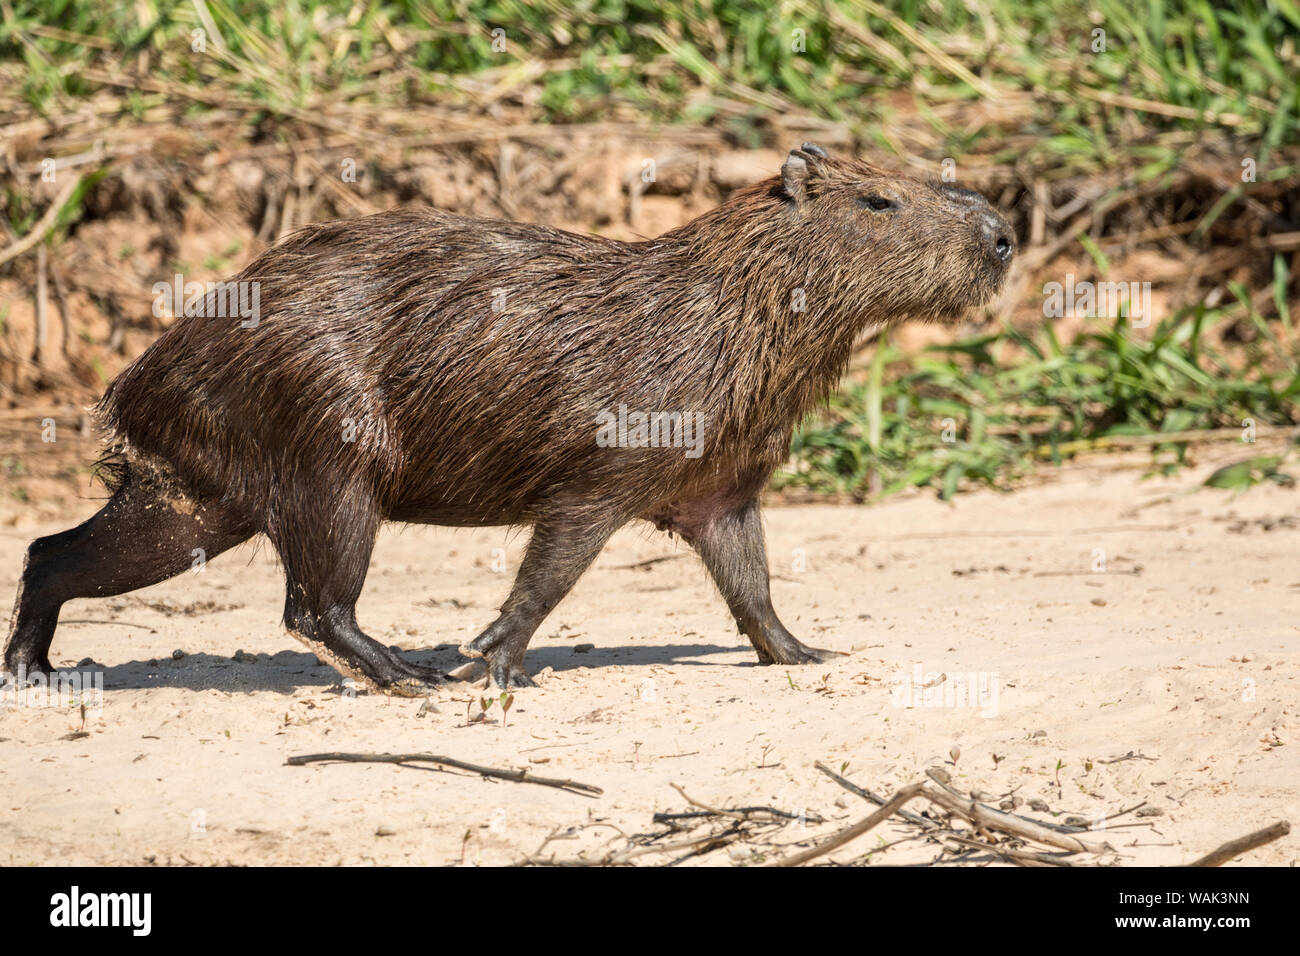 Pantanal, Mato Grosso, Brazil. Adult capybara walking on a sandy beach. Stock Photo